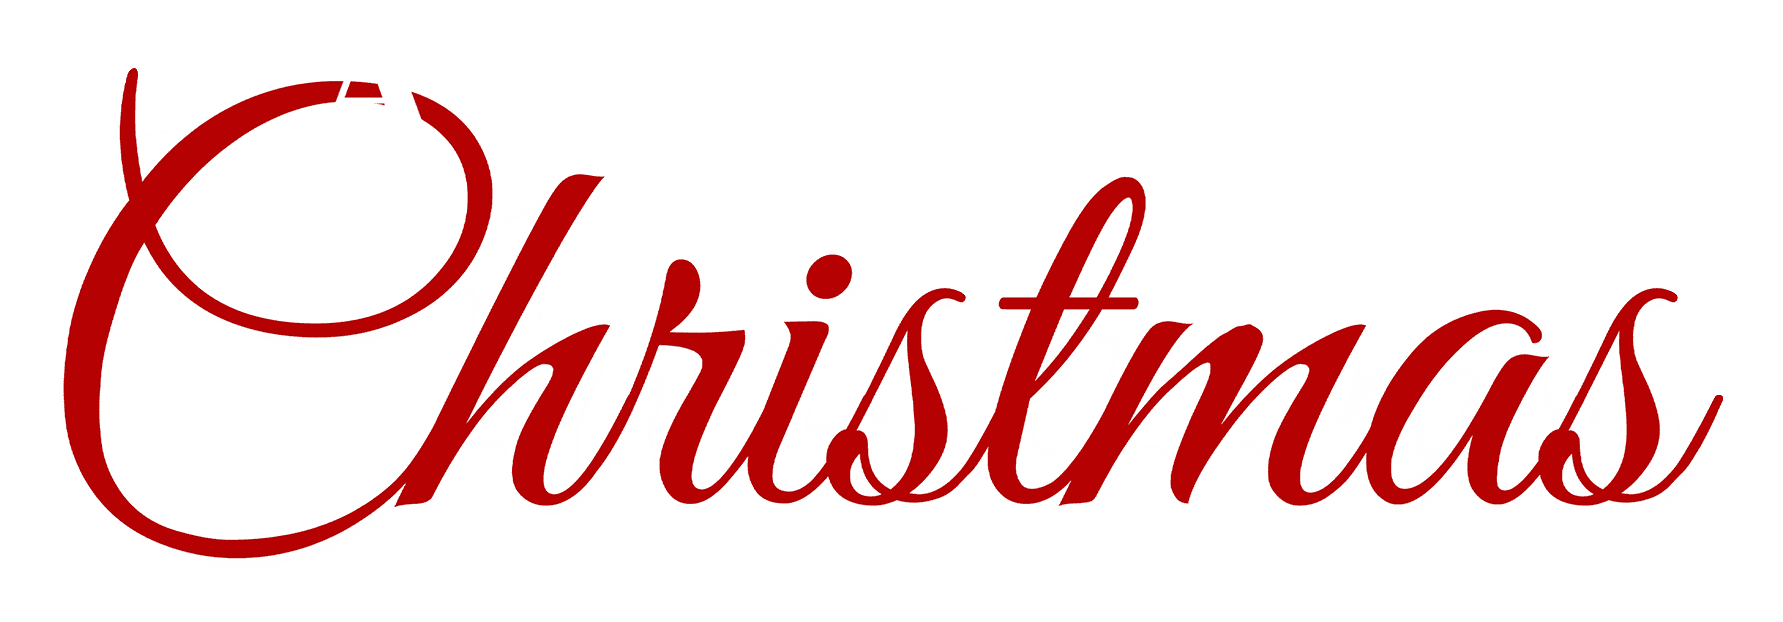 A Brush with Christmas logo